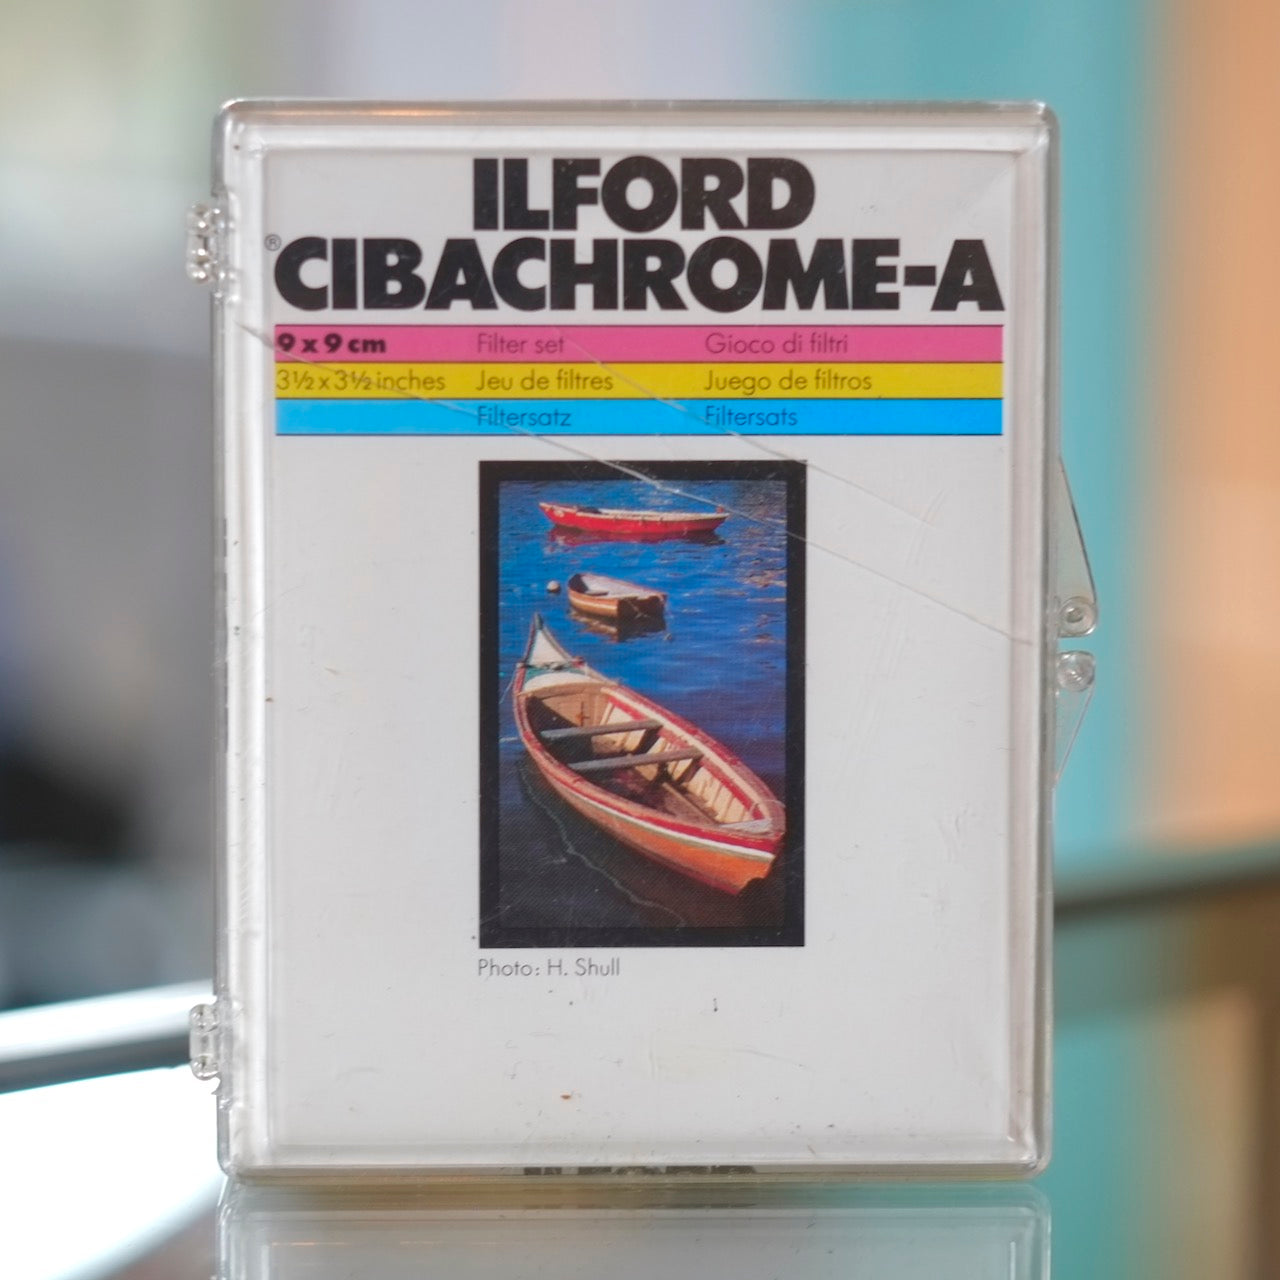 Ilford Cibachrome-A Filter Set